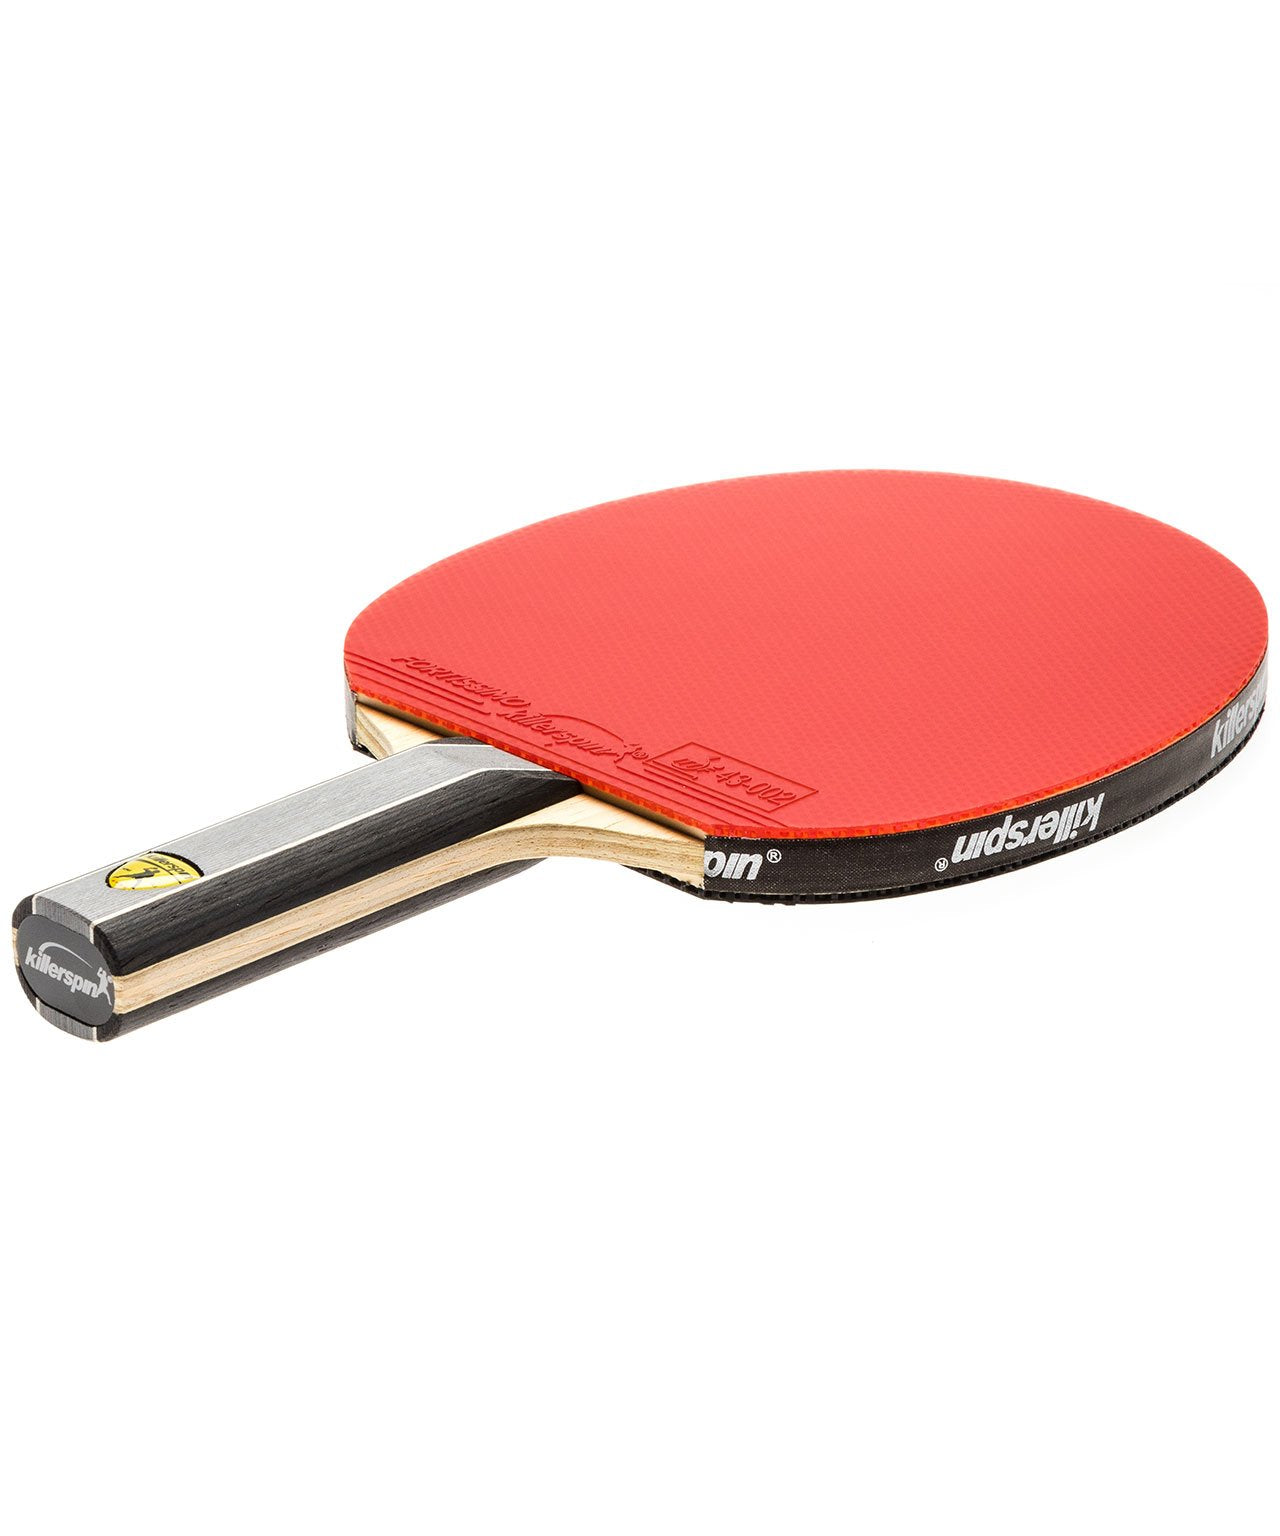 Kido 7P RTG Premium Ping Pong Paddle | Killerspin Table Tennis